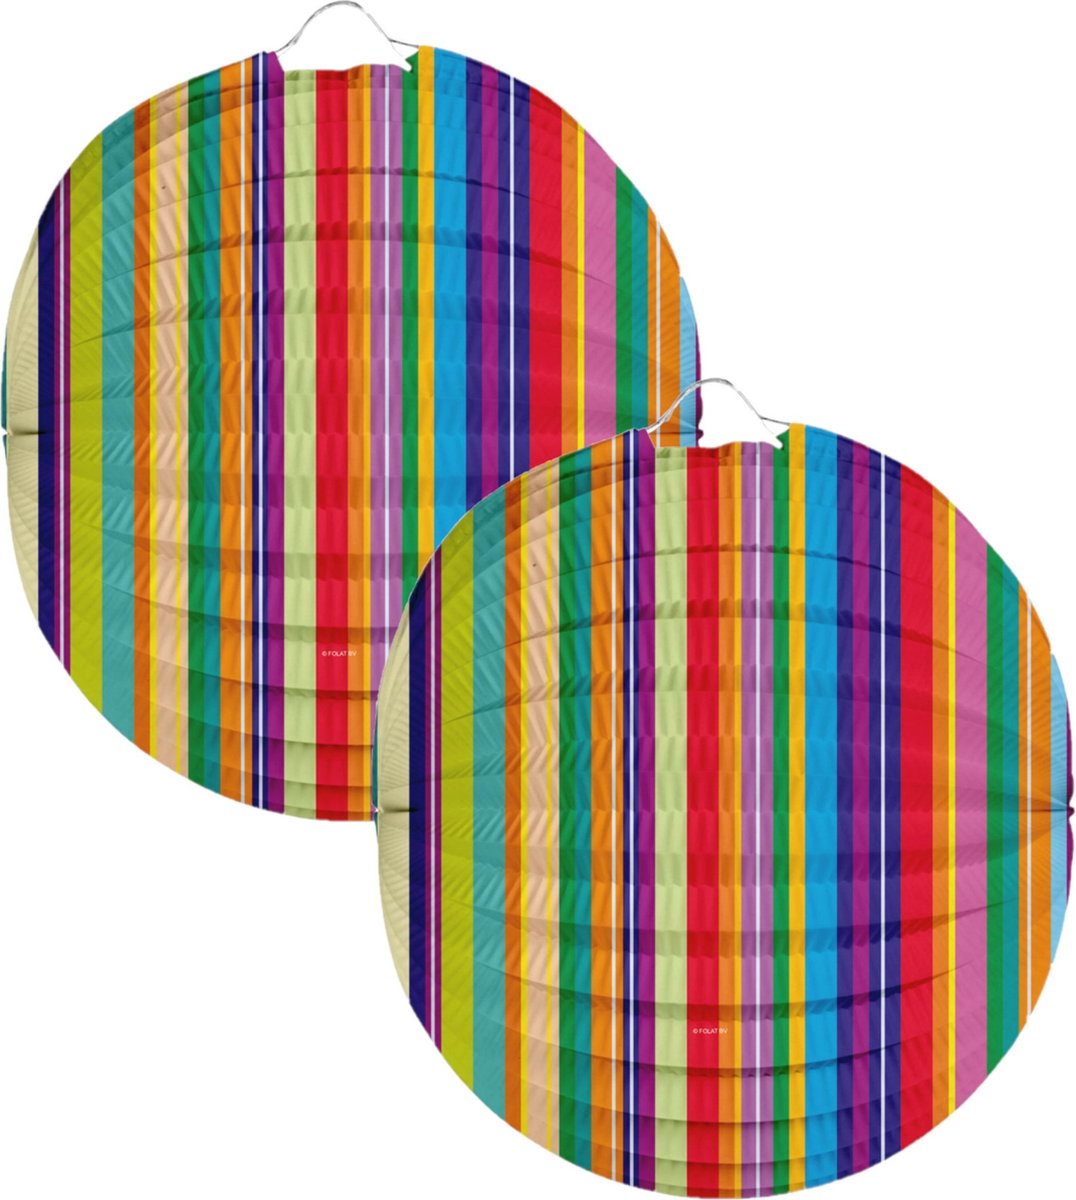 Folat Lampion strepen - 2x - 22 cm - multi kleuren - papier - Sint maarten/kinderfeestje lampionnen - Folat